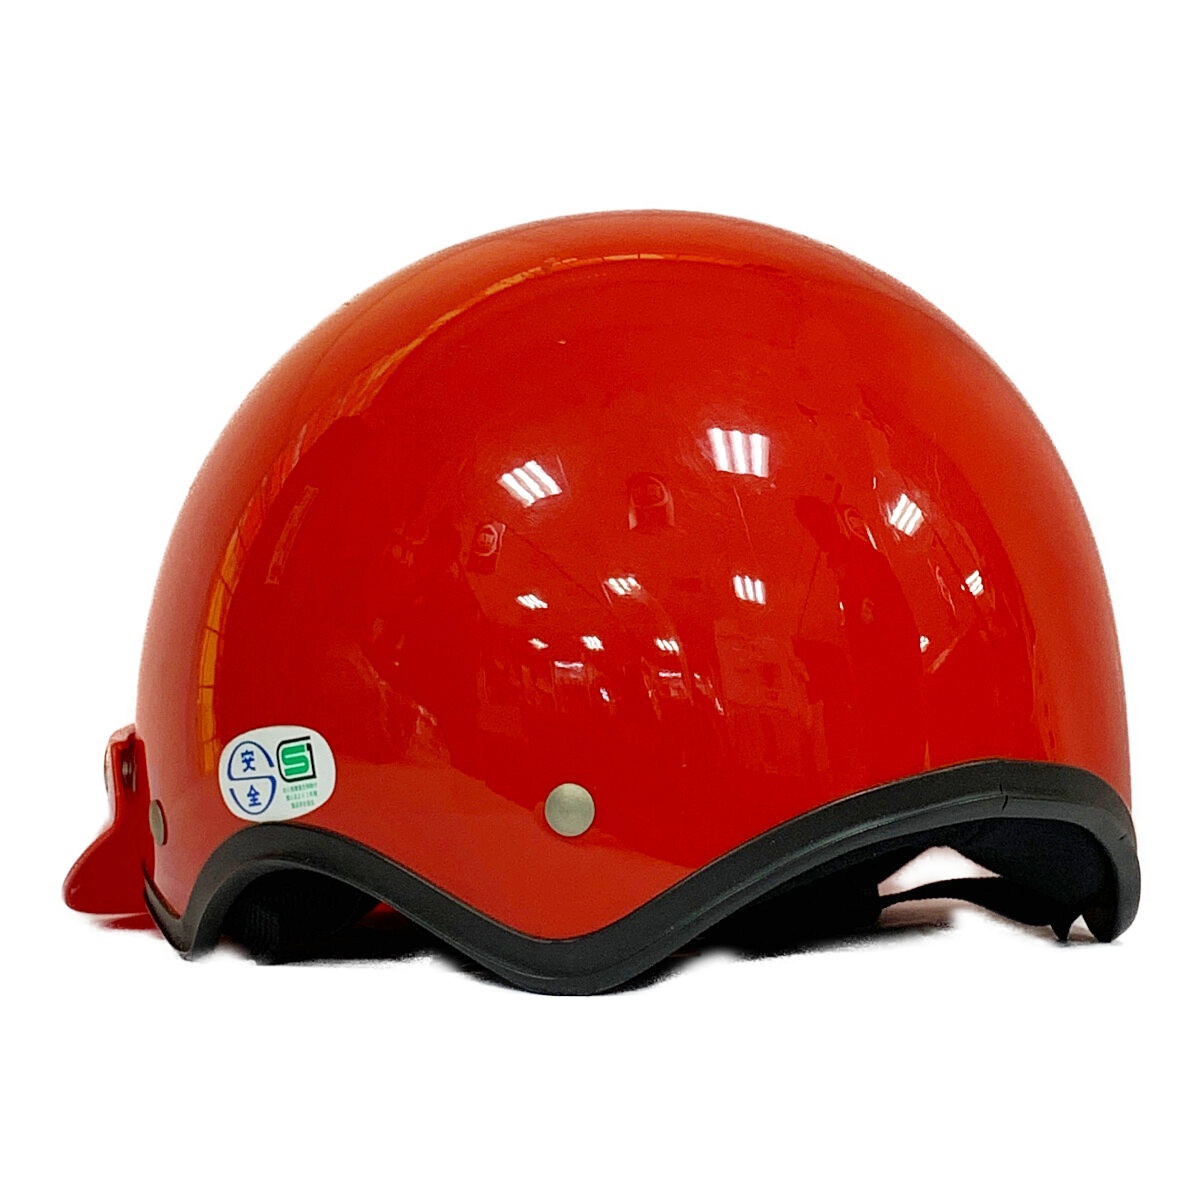 ♭♭ SHOEI show ei bike helmet 57~58 centimeter M size inscription TR-1 red retro [ Junk ] deterioration equipped generally condition . bad 